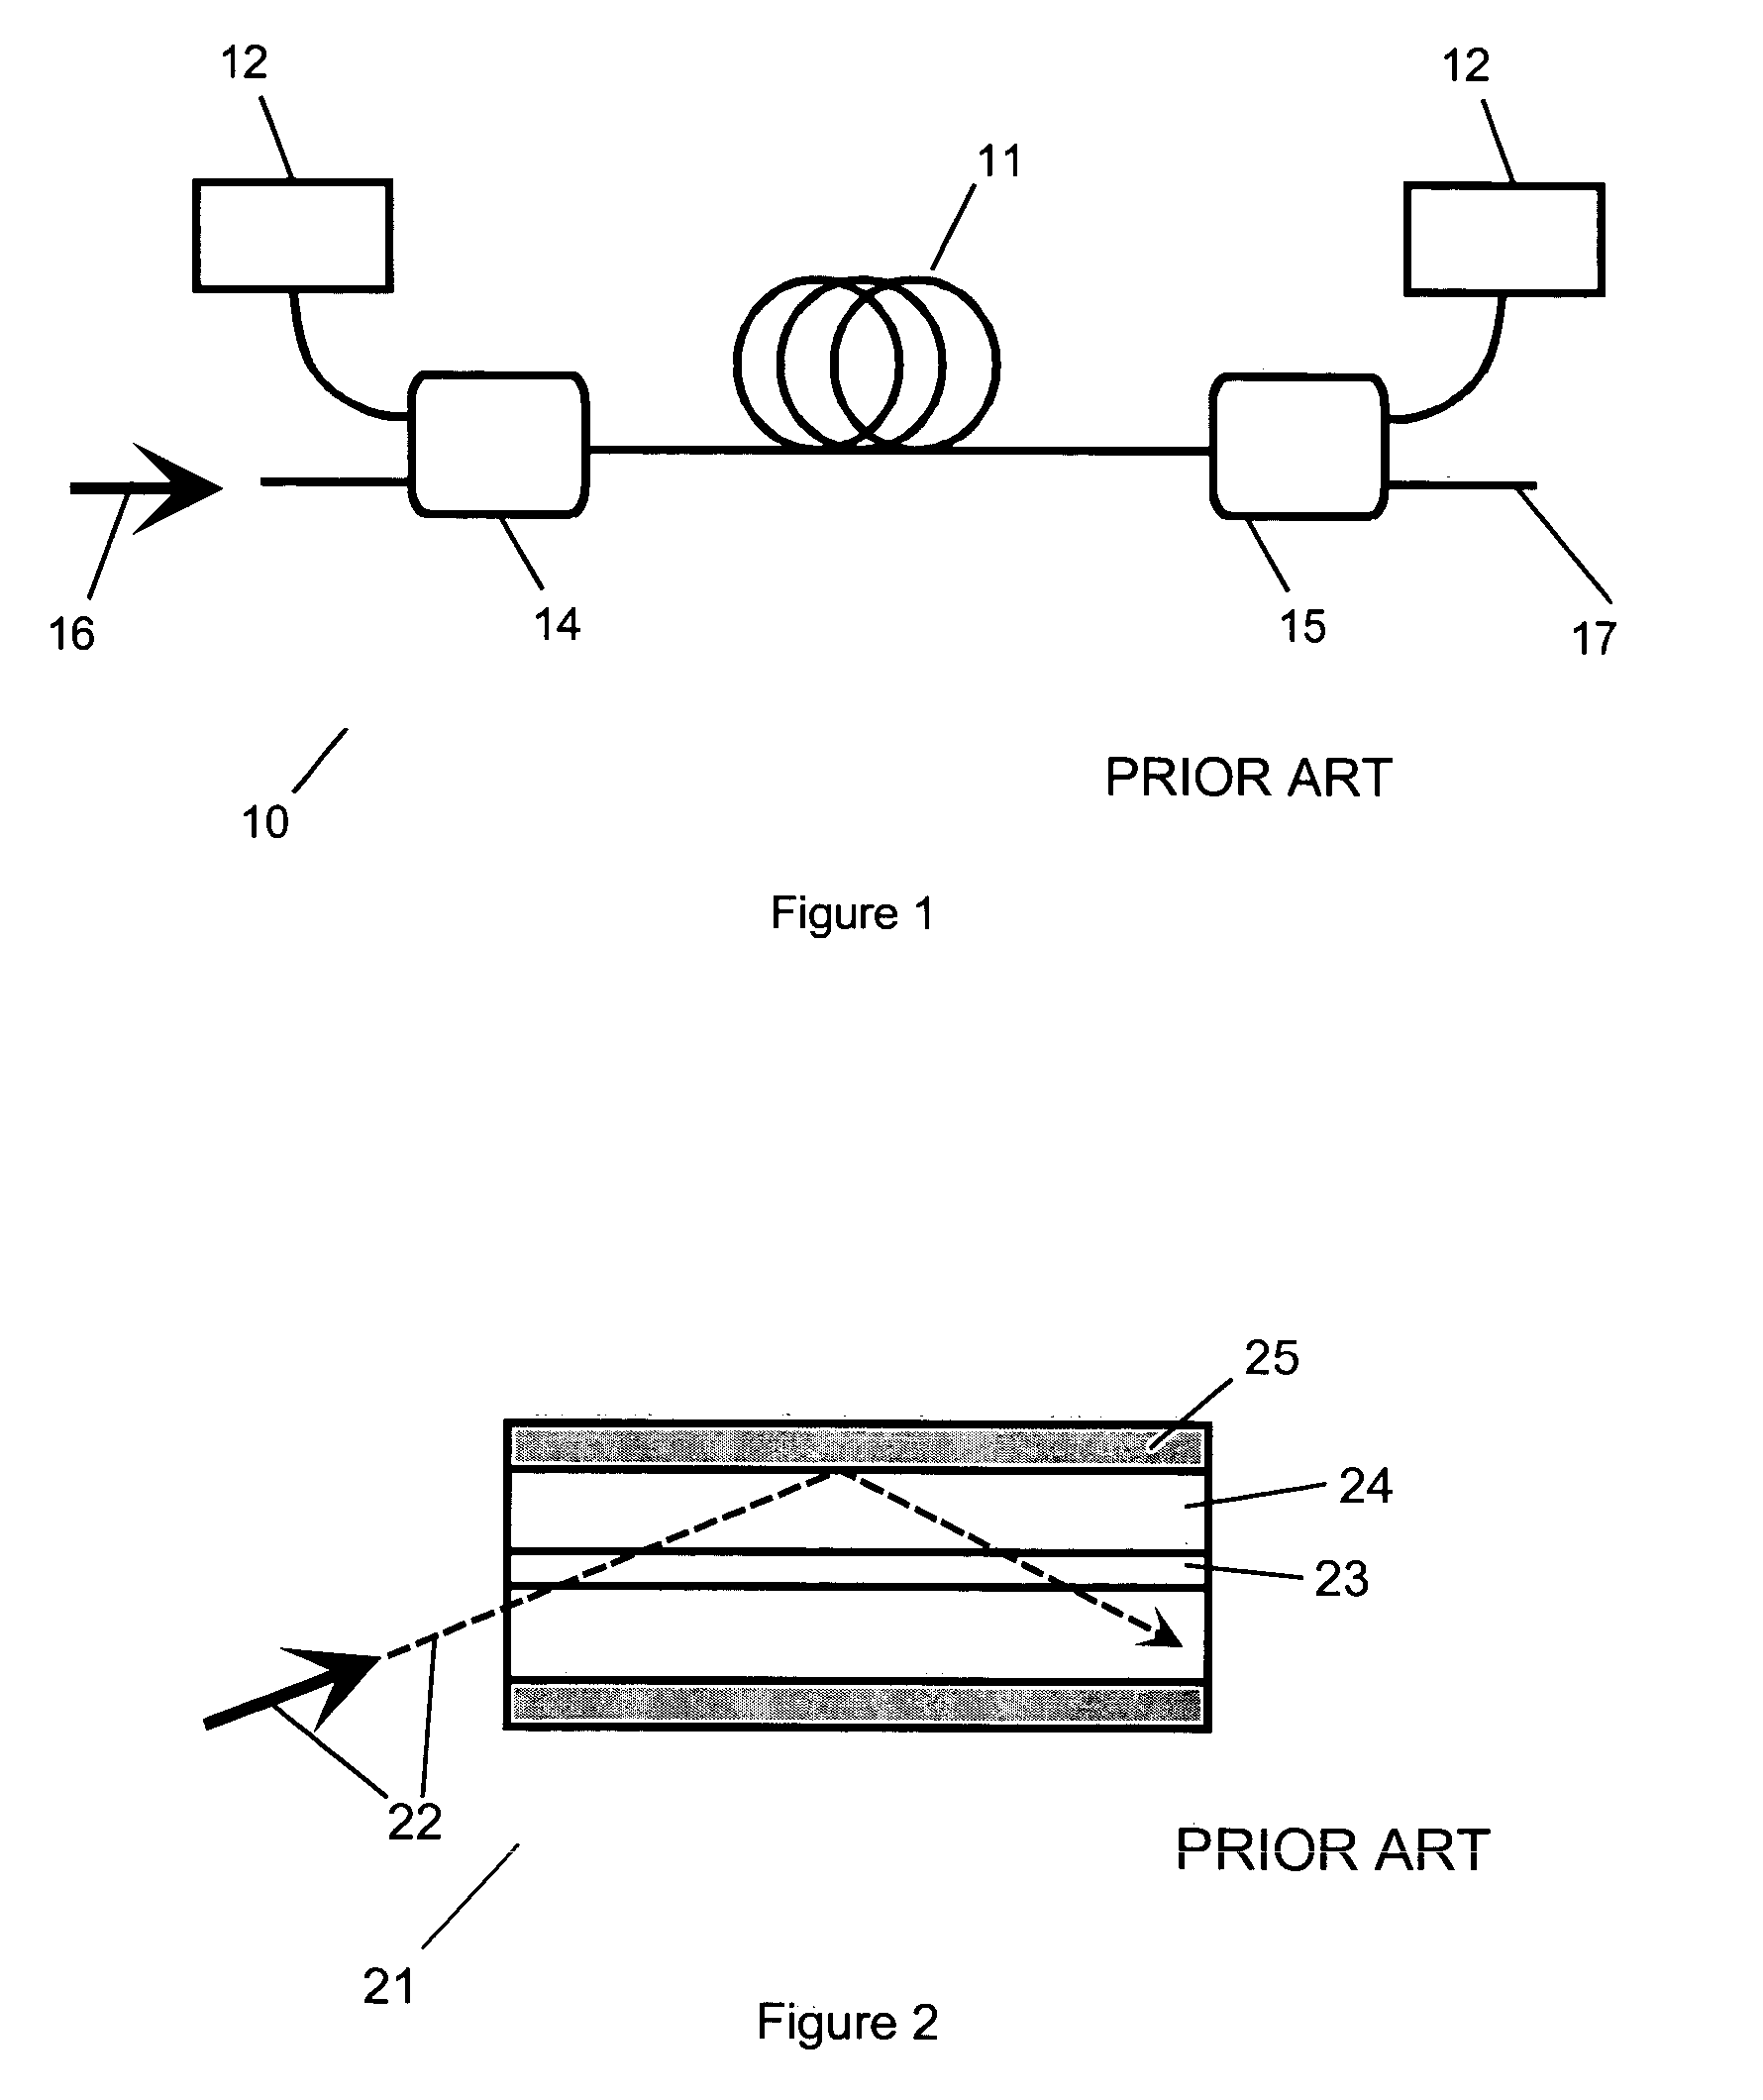 Multi-fibre arrangement for high power fibre lasers and amplifiers